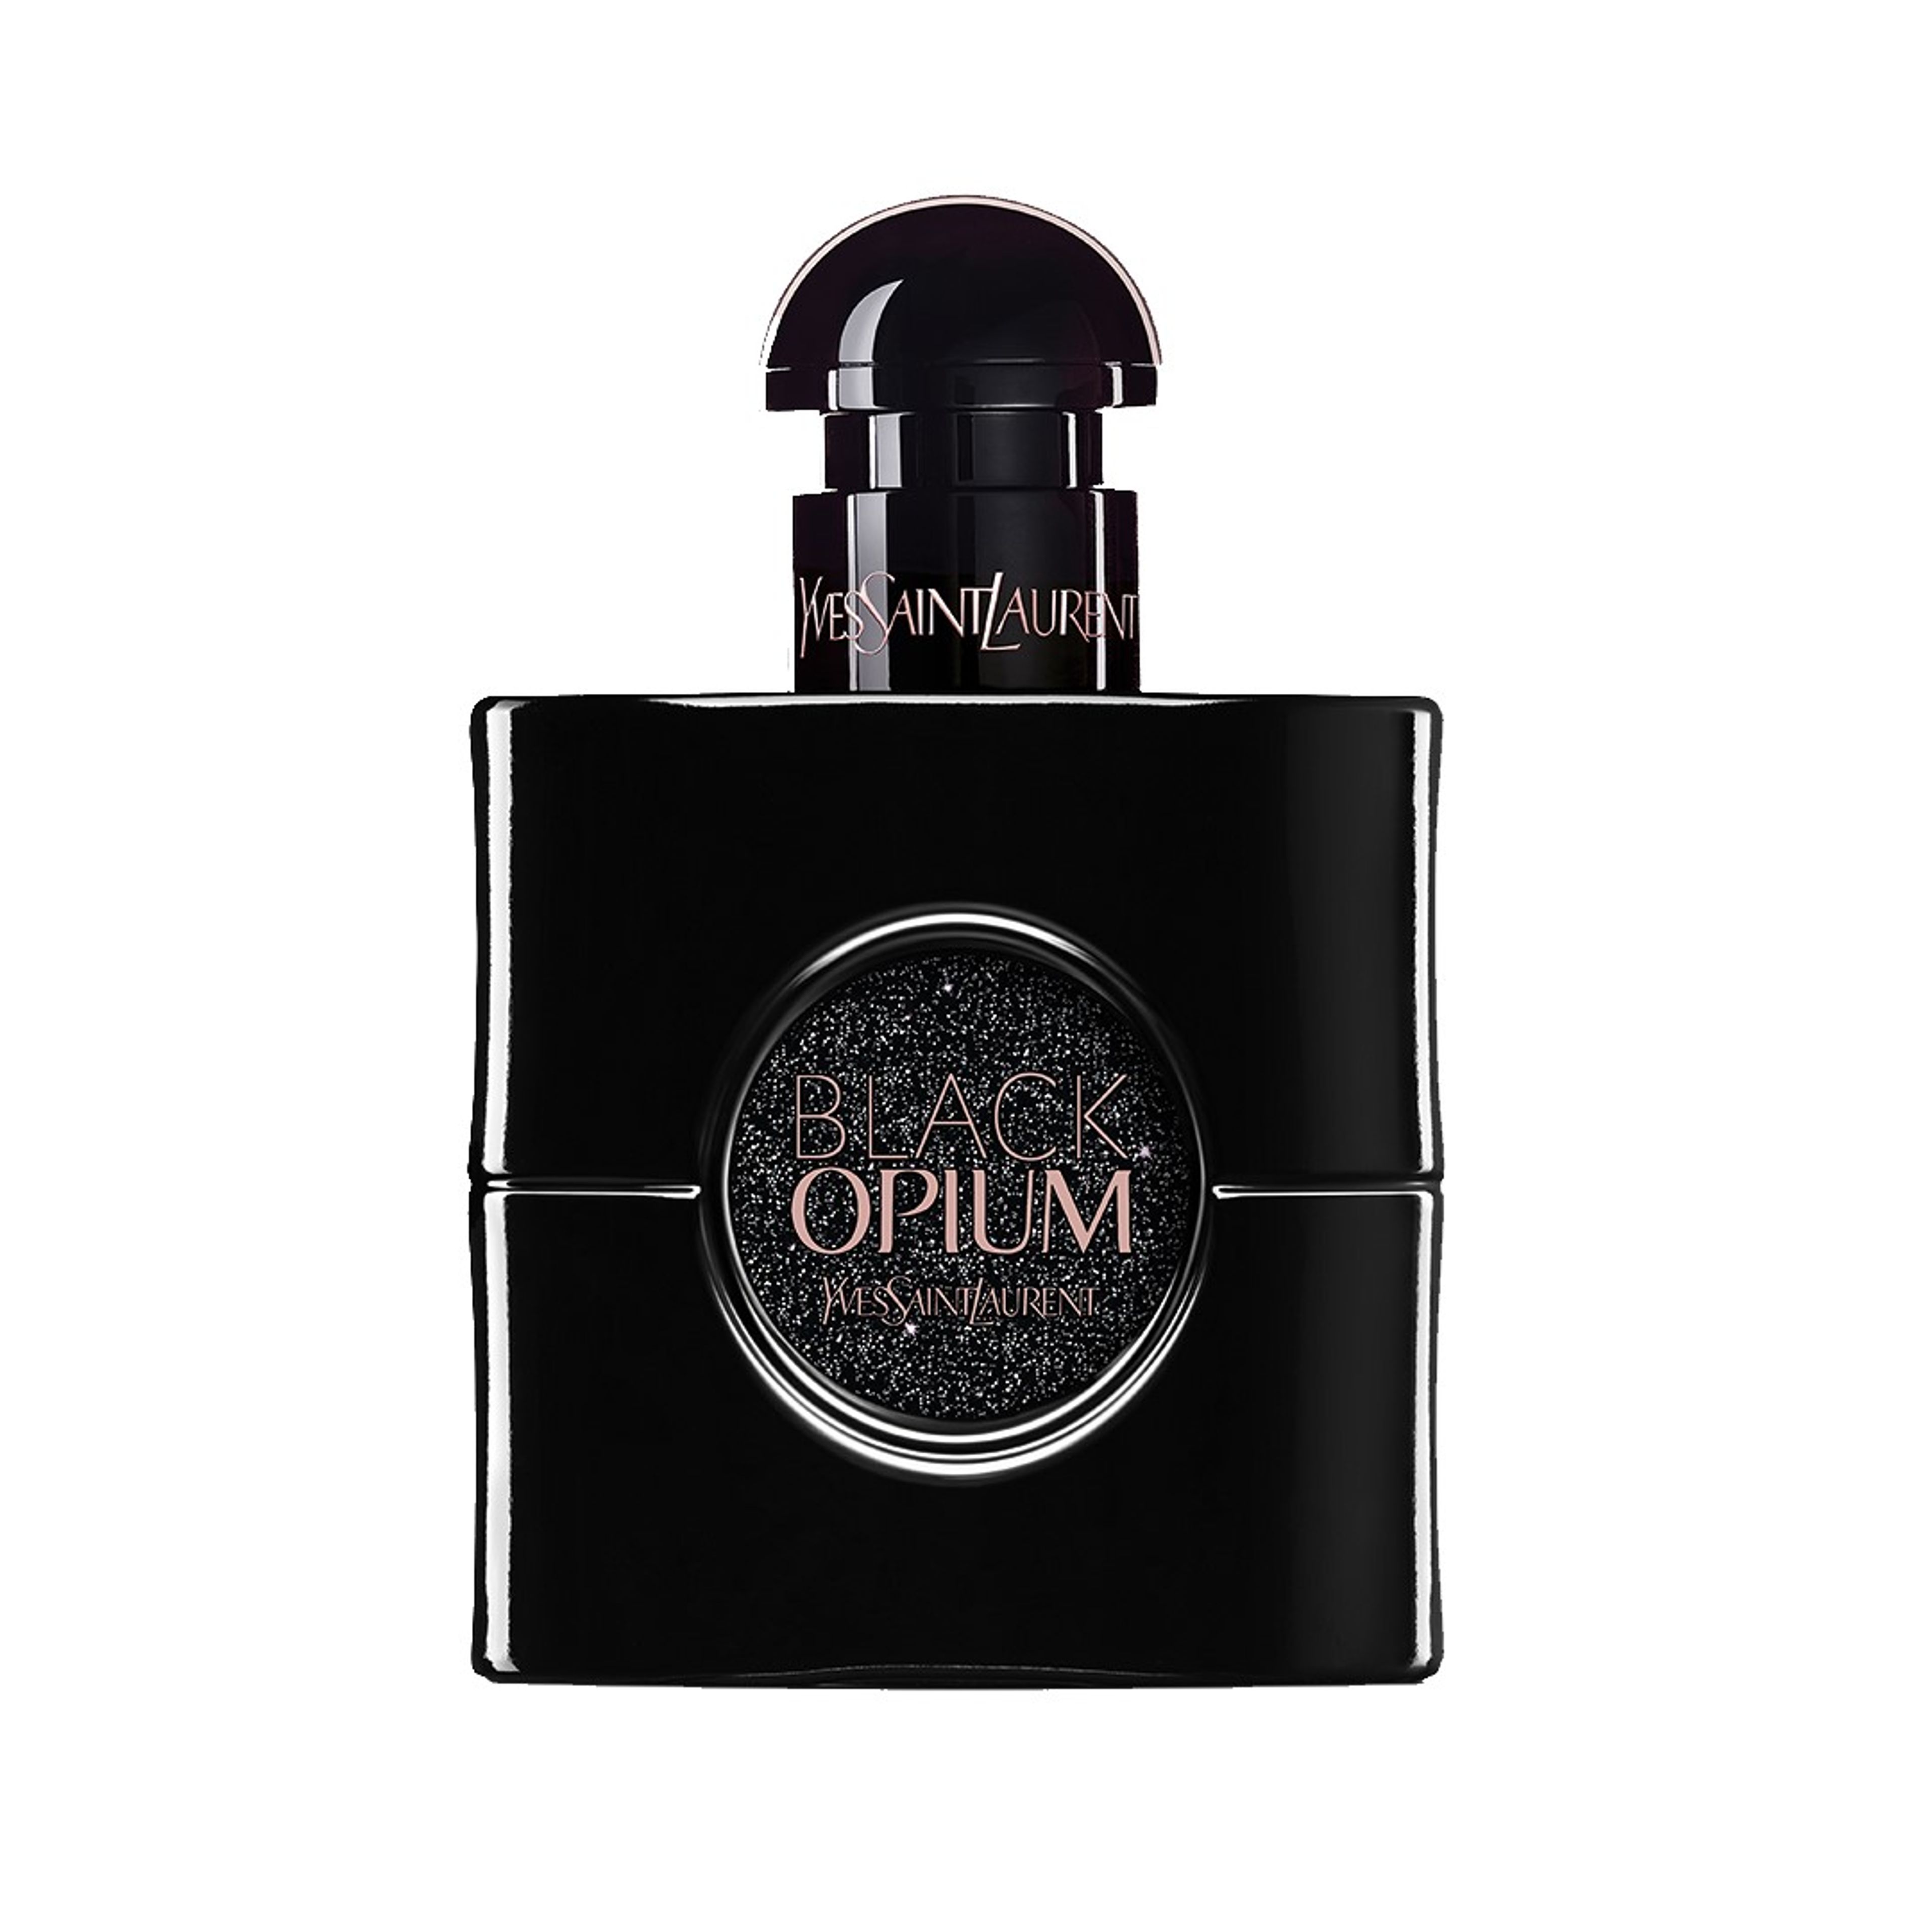 Yves Saint Laurent Ysl Black Opium Le Parfum 1